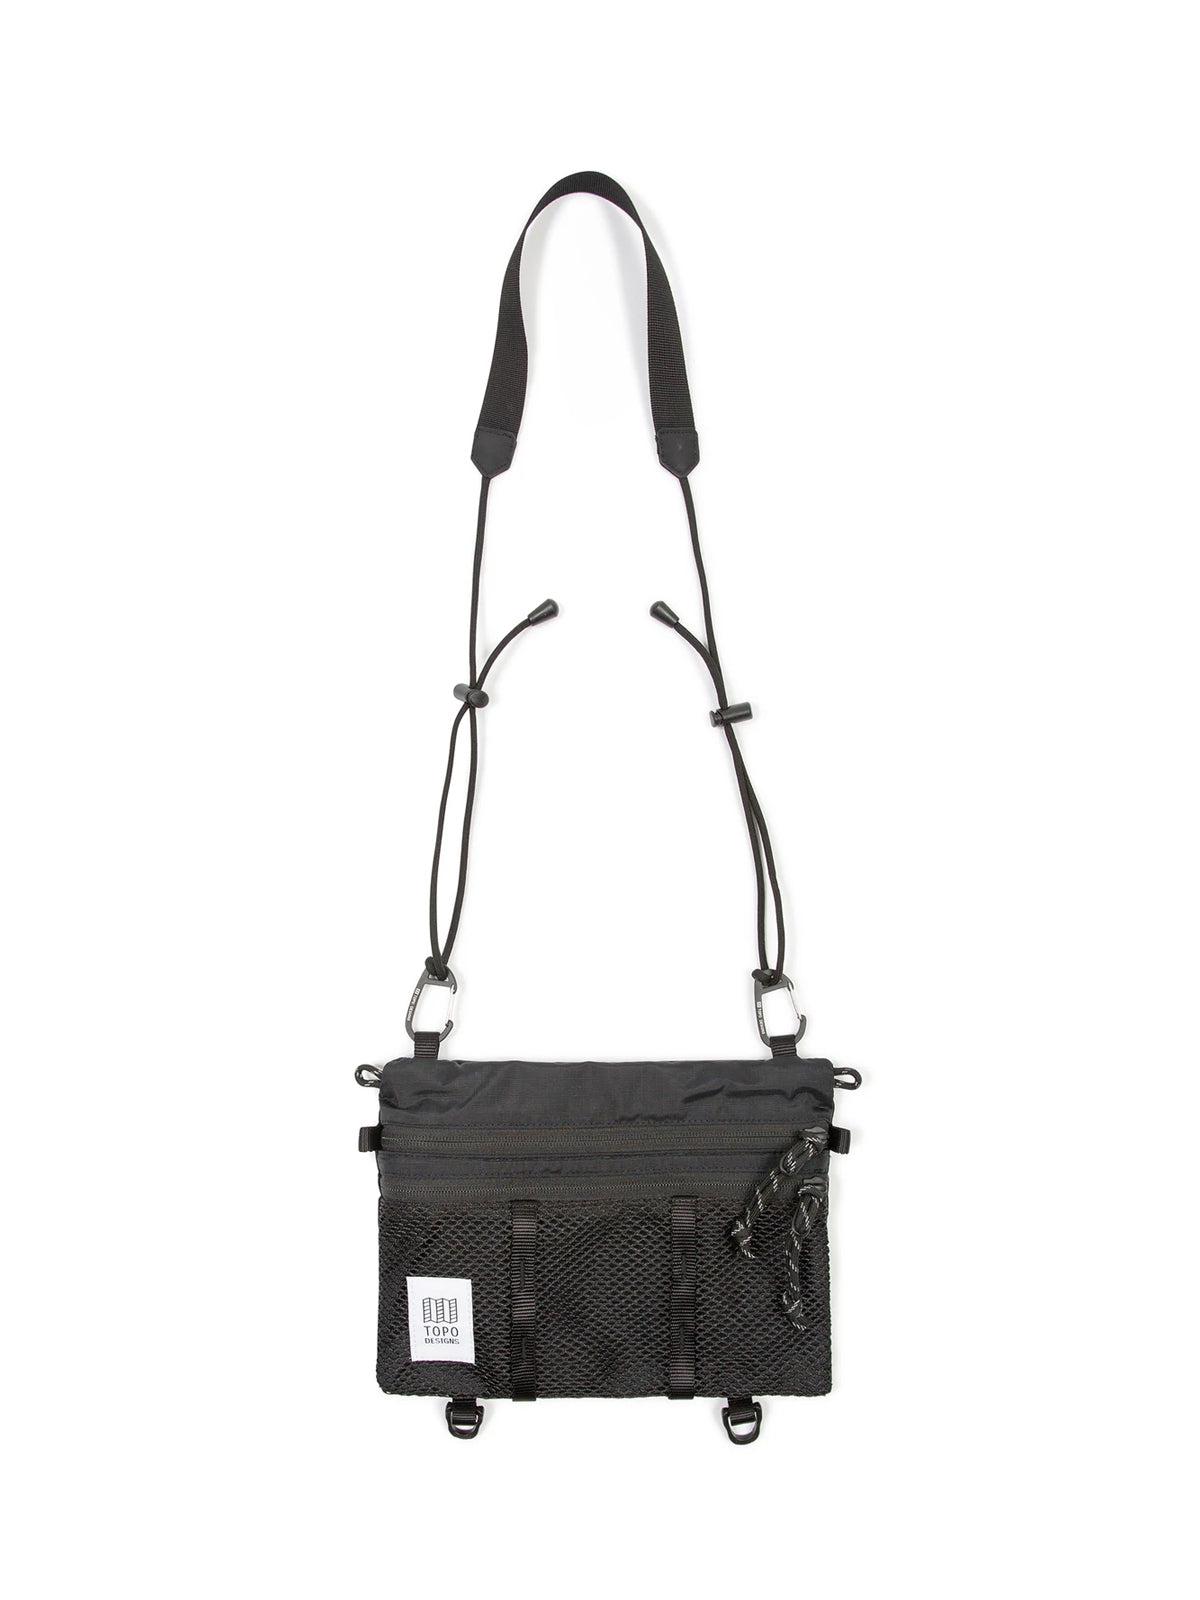 Topo Designs Mountain Accessory Shoulder Bag Black